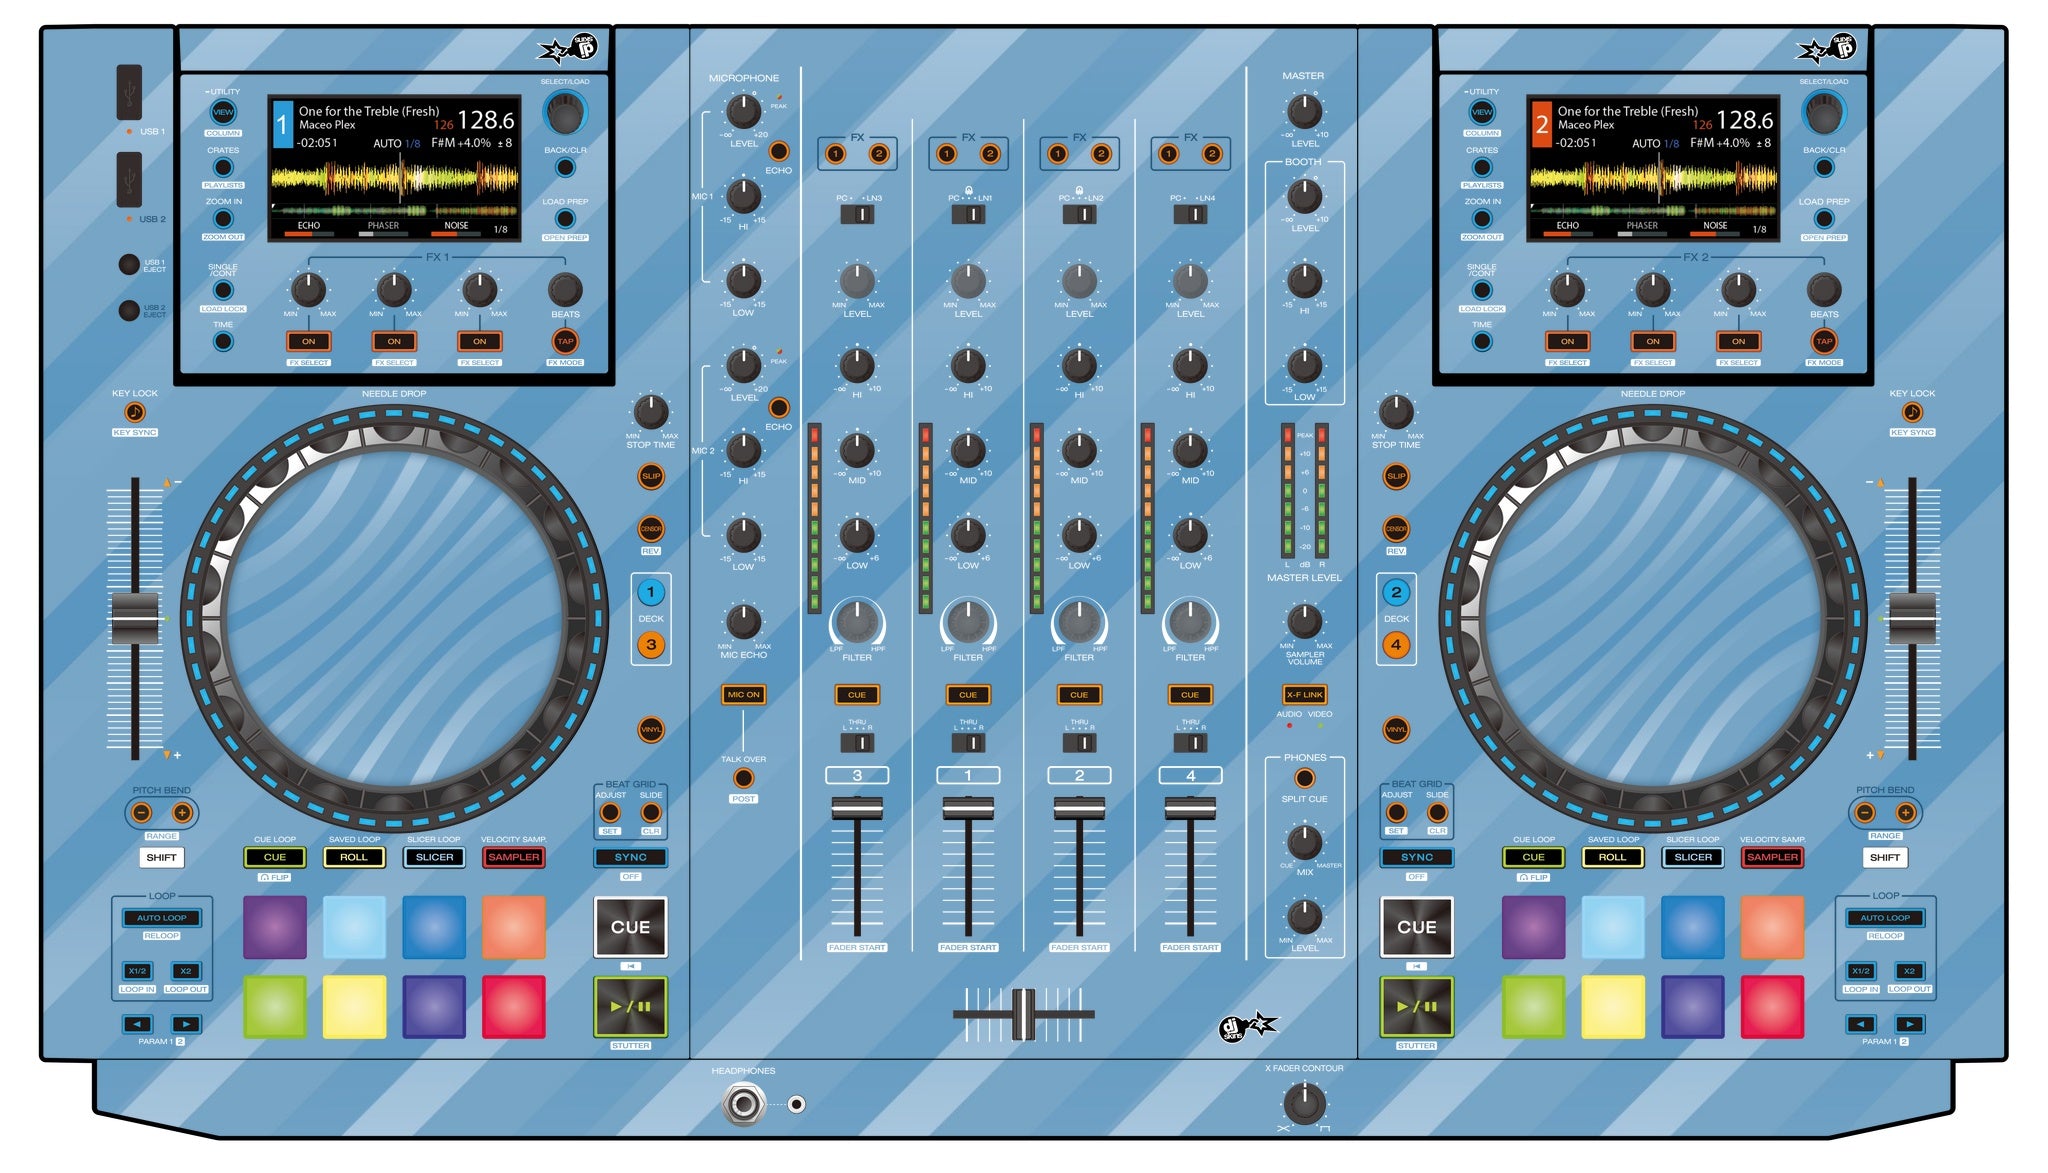 Denon DJ MCX8000 – Import Group PRO